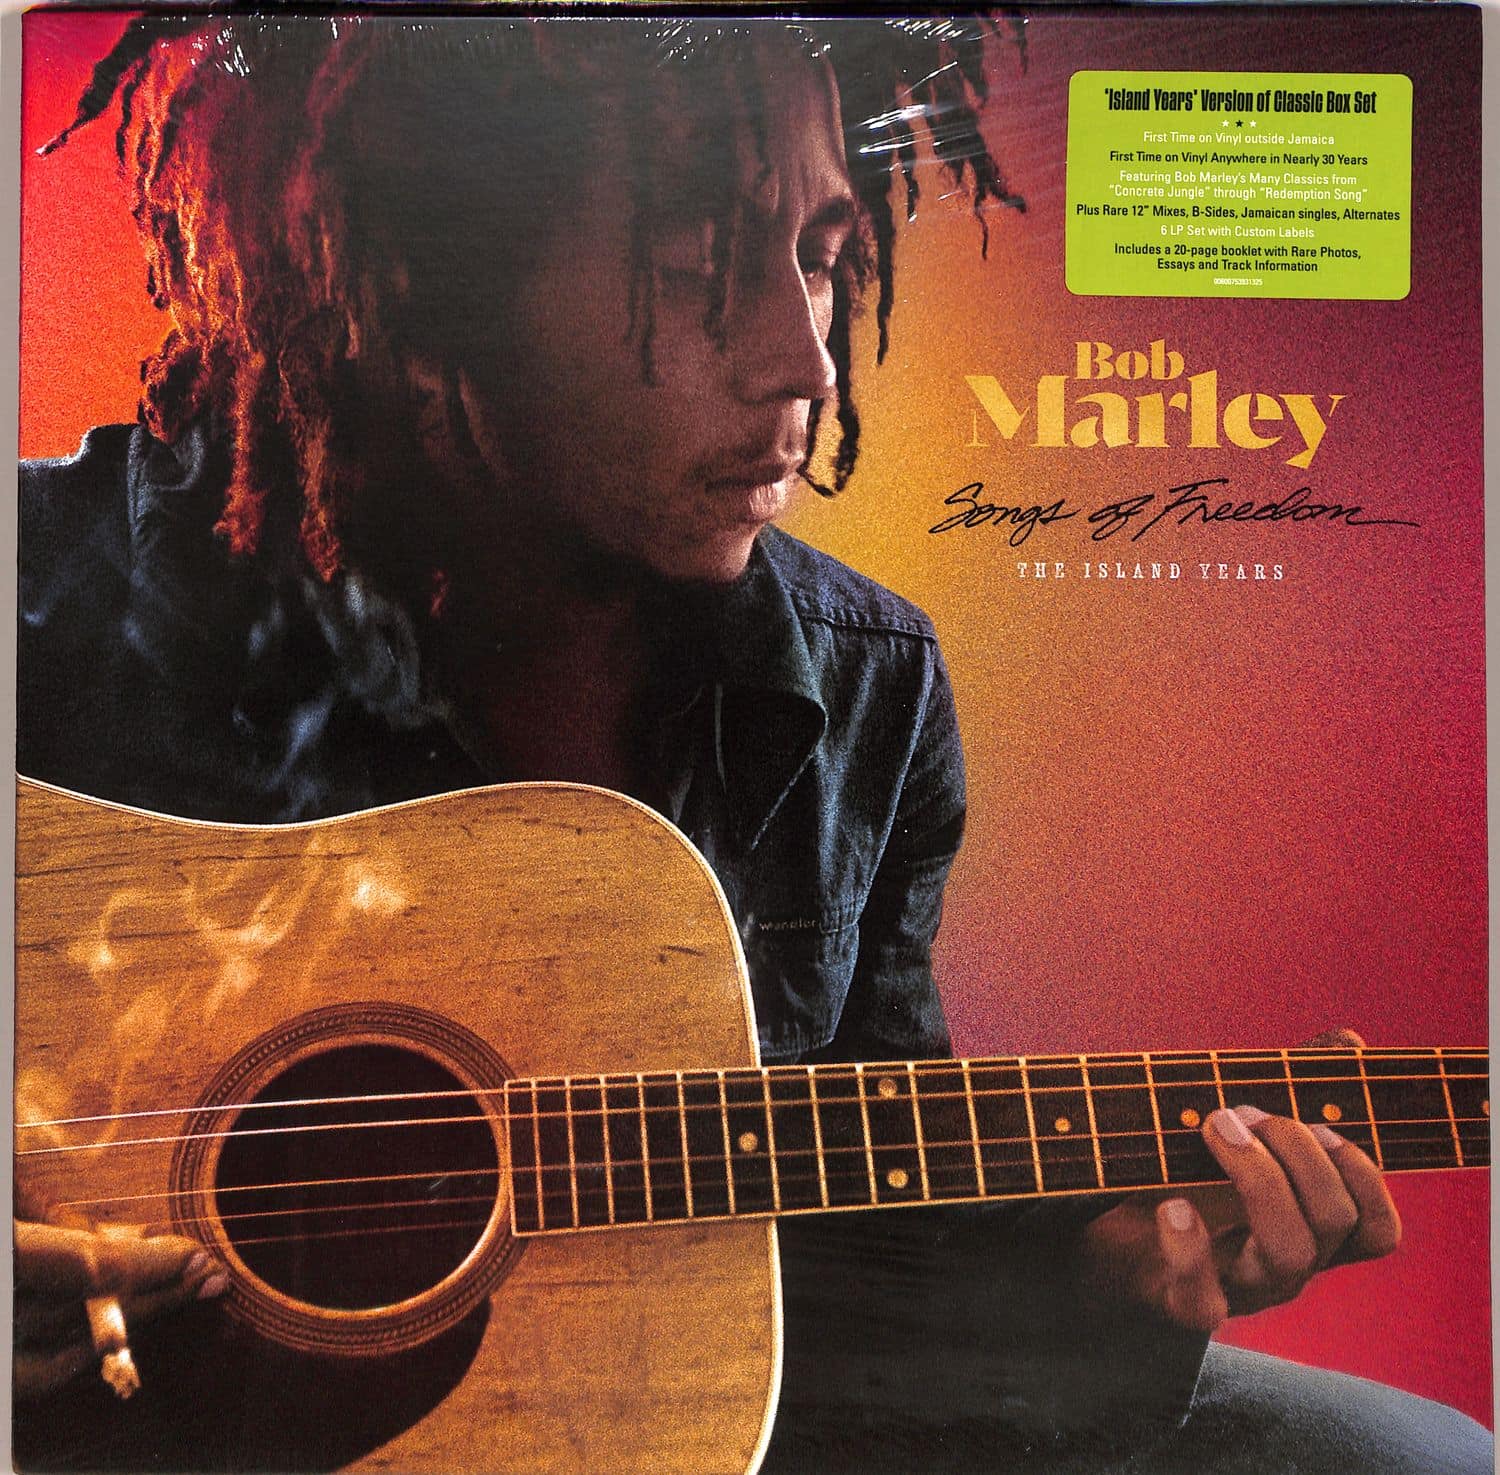 Bob Marley - SONGS OF FREEDOM: THE ISLAND YEARS 